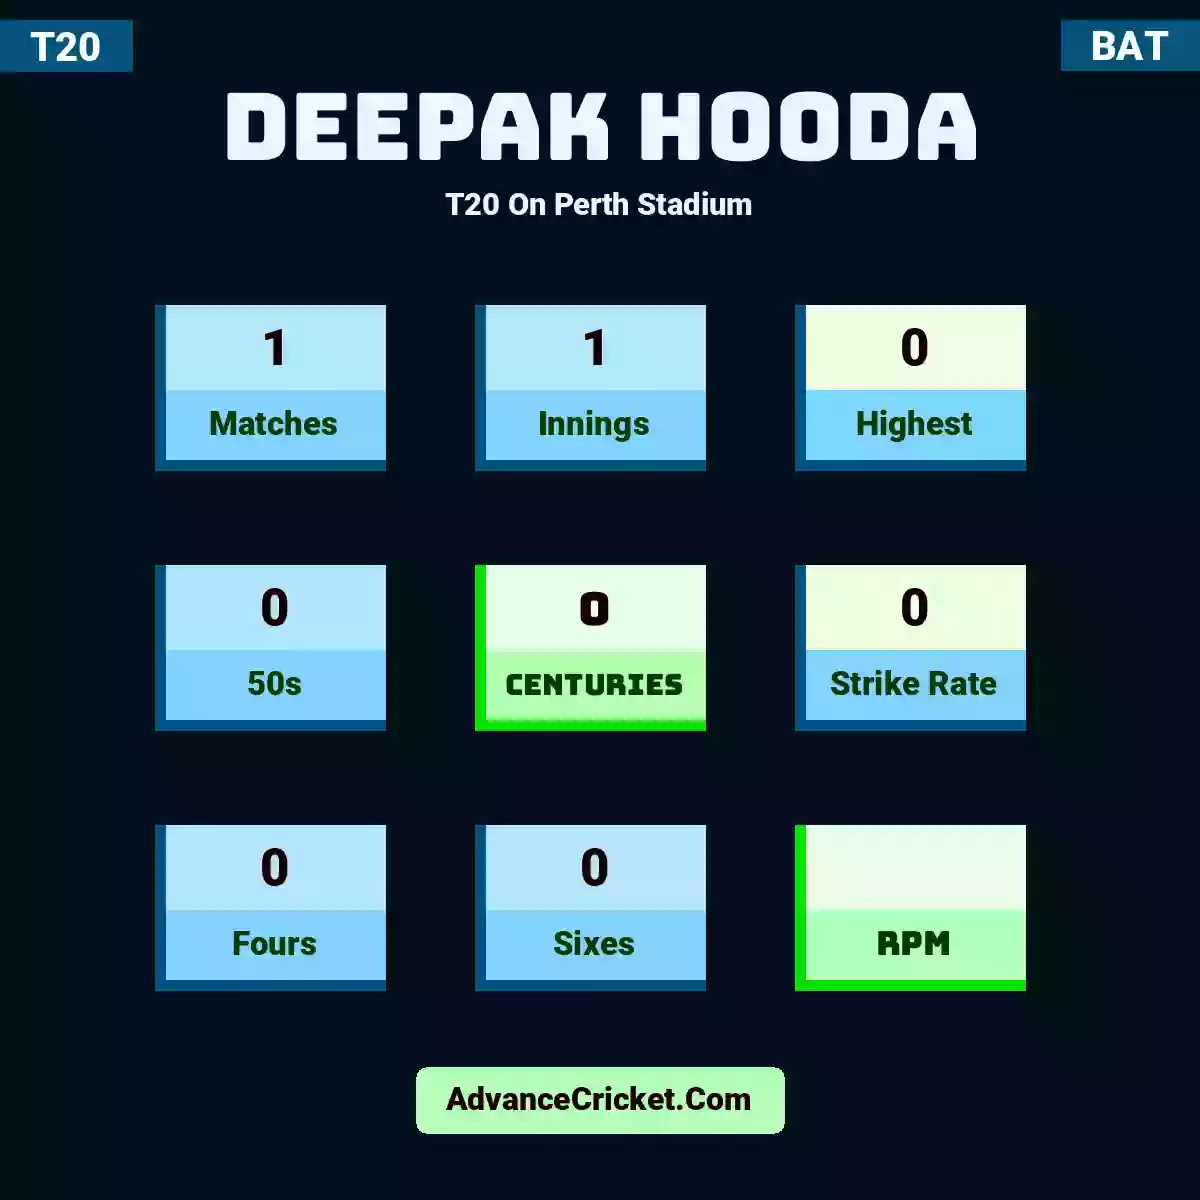 Deepak Hooda T20  On Perth Stadium, Deepak Hooda played 1 matches, scored 0 runs as highest, 0 half-centuries, and 0 centuries, with a strike rate of 0. D.Hooda hit 0 fours and 0 sixes.